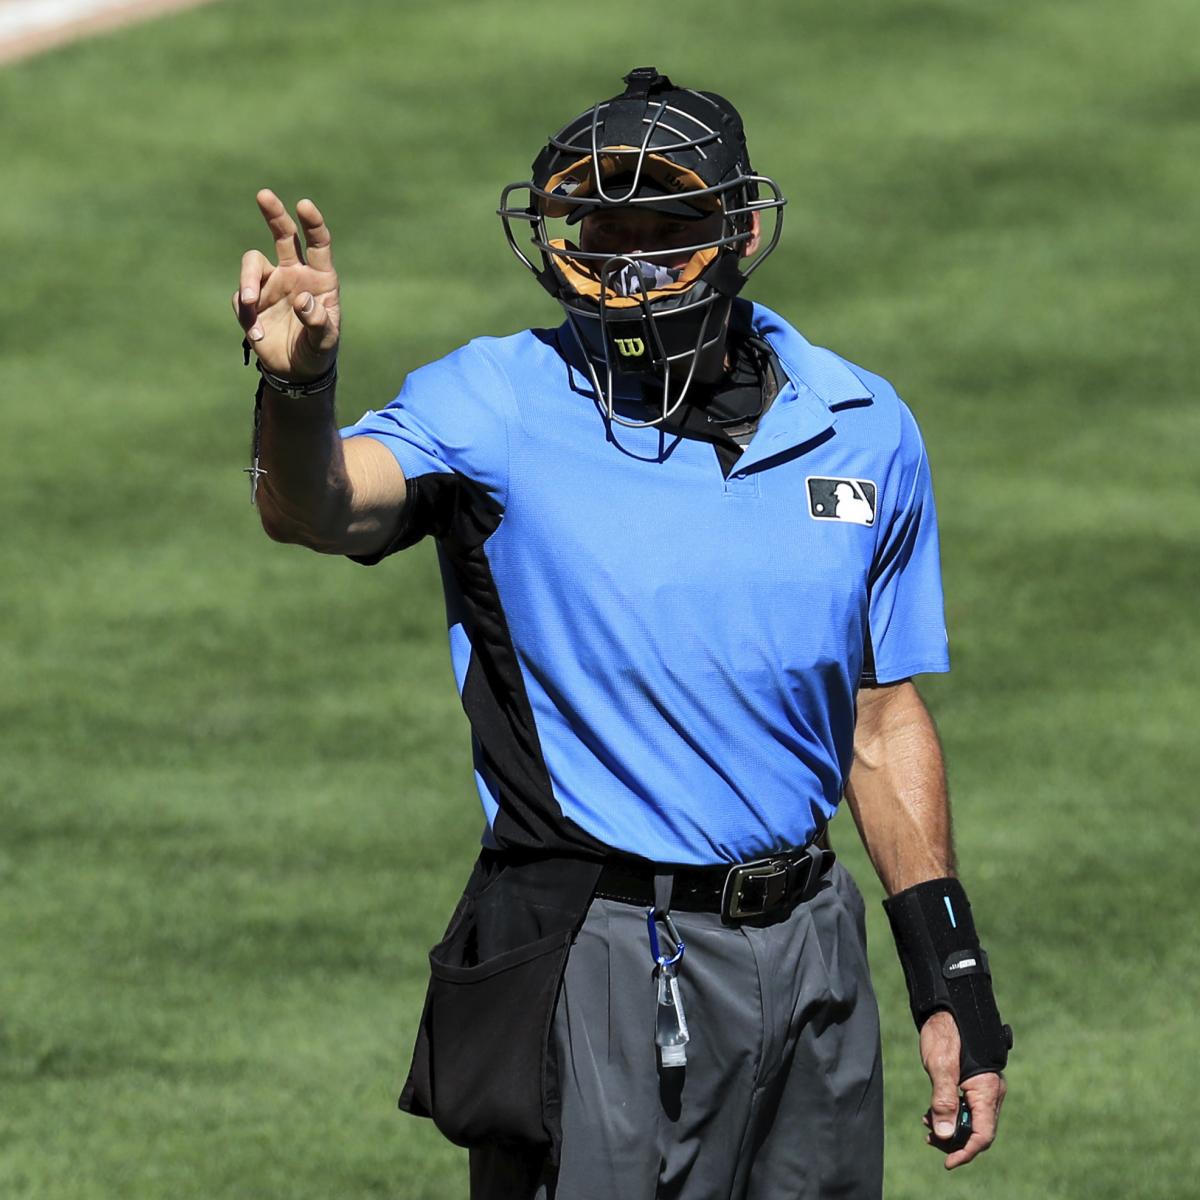 Umpire's racial discrimination case against MLB denied for reinstatement